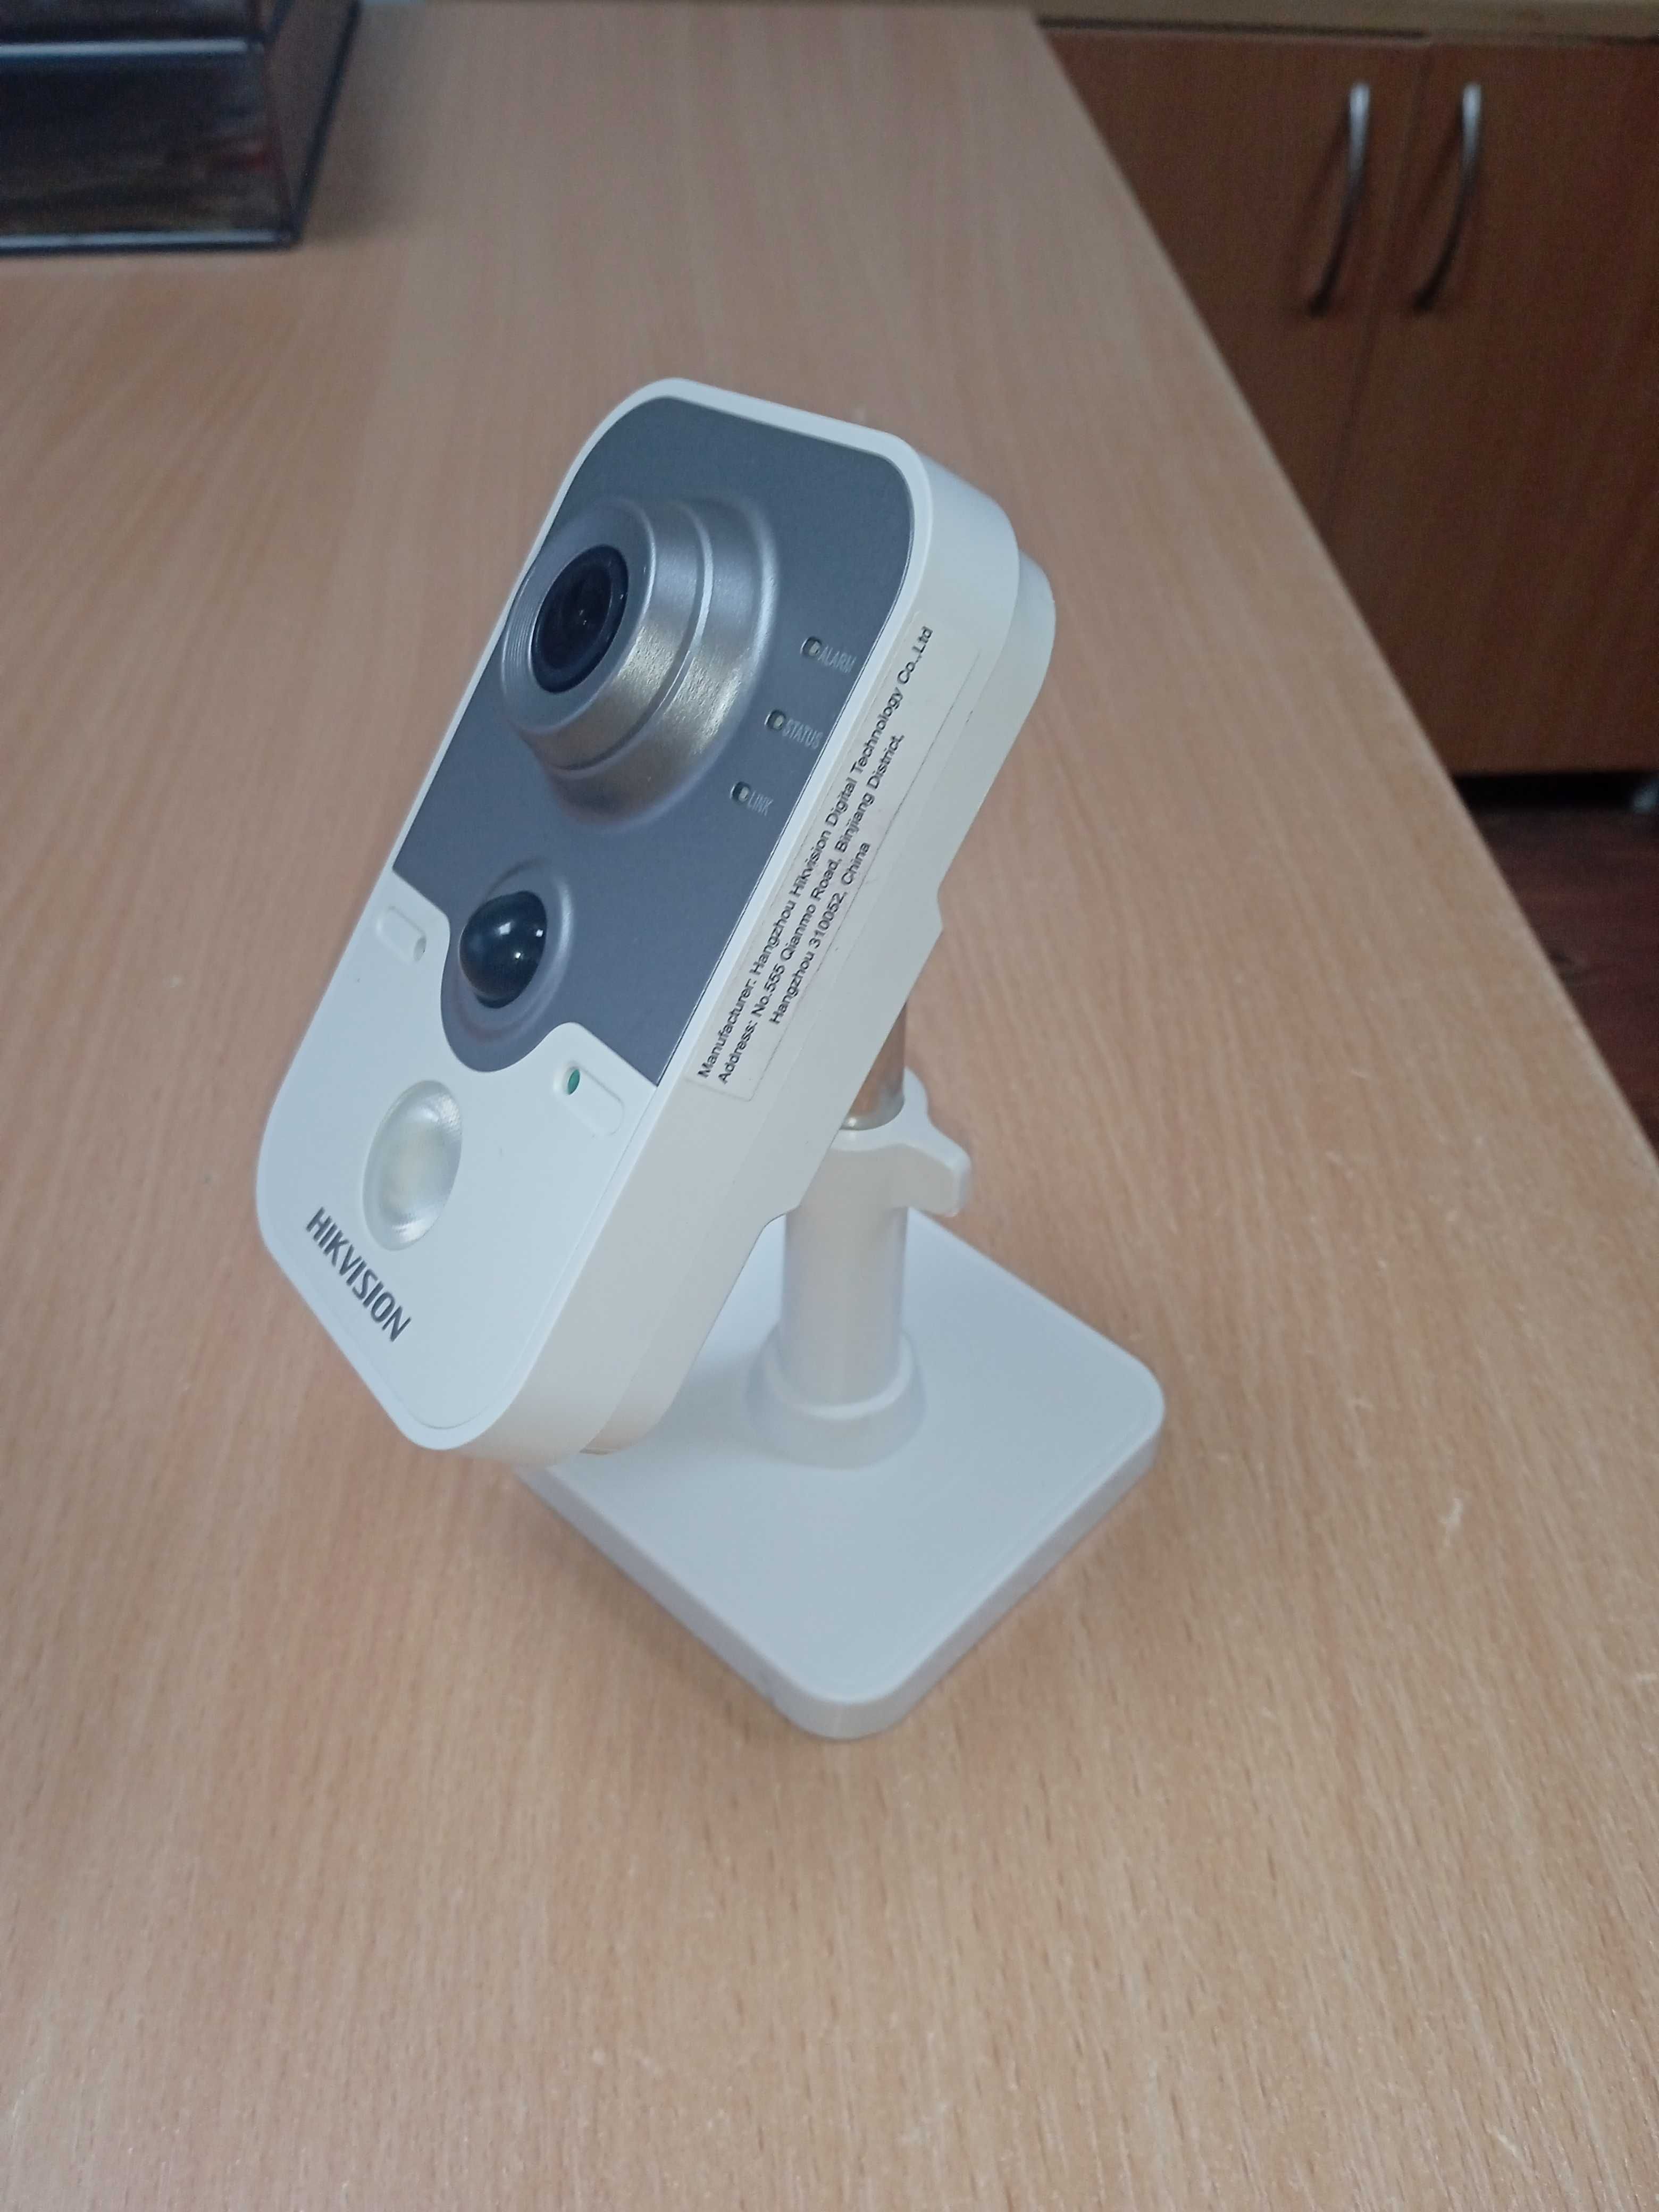 камера HIKVISION DS-2CD2420F-I (2.8 мм)